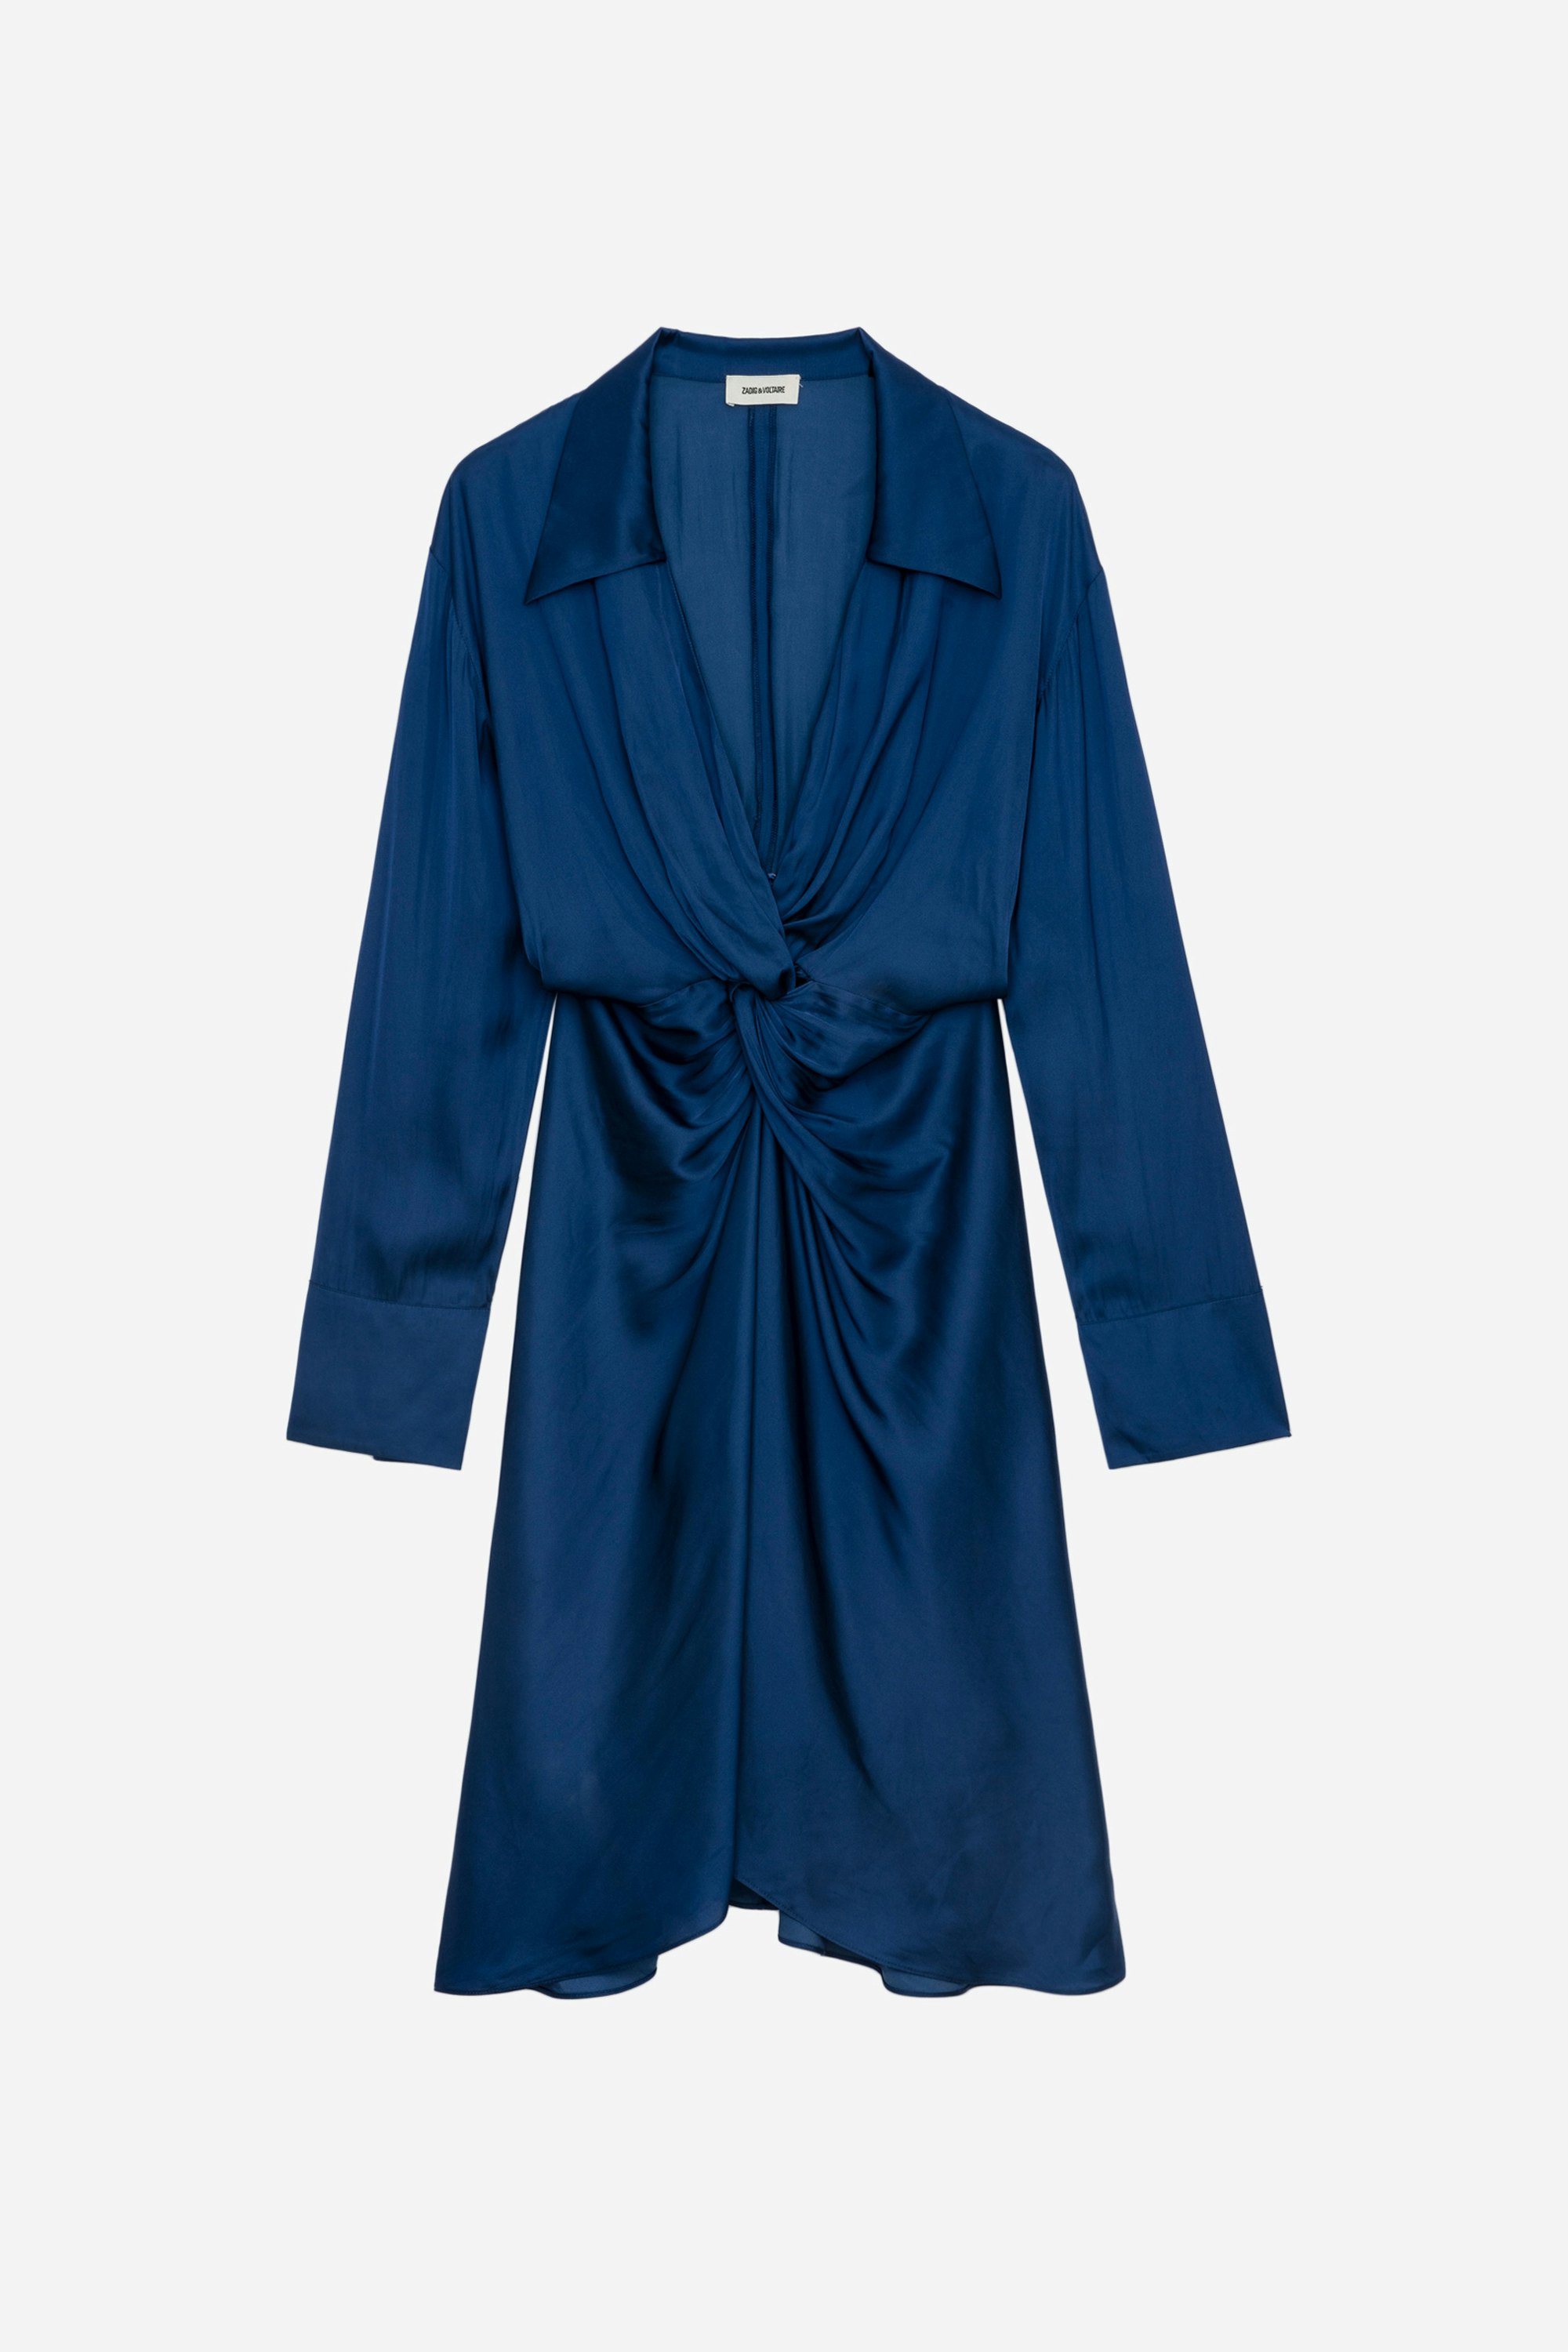 Rozo Satin Dress - Women’s royal blue draped satin midi dress with asymmetric sleeves.